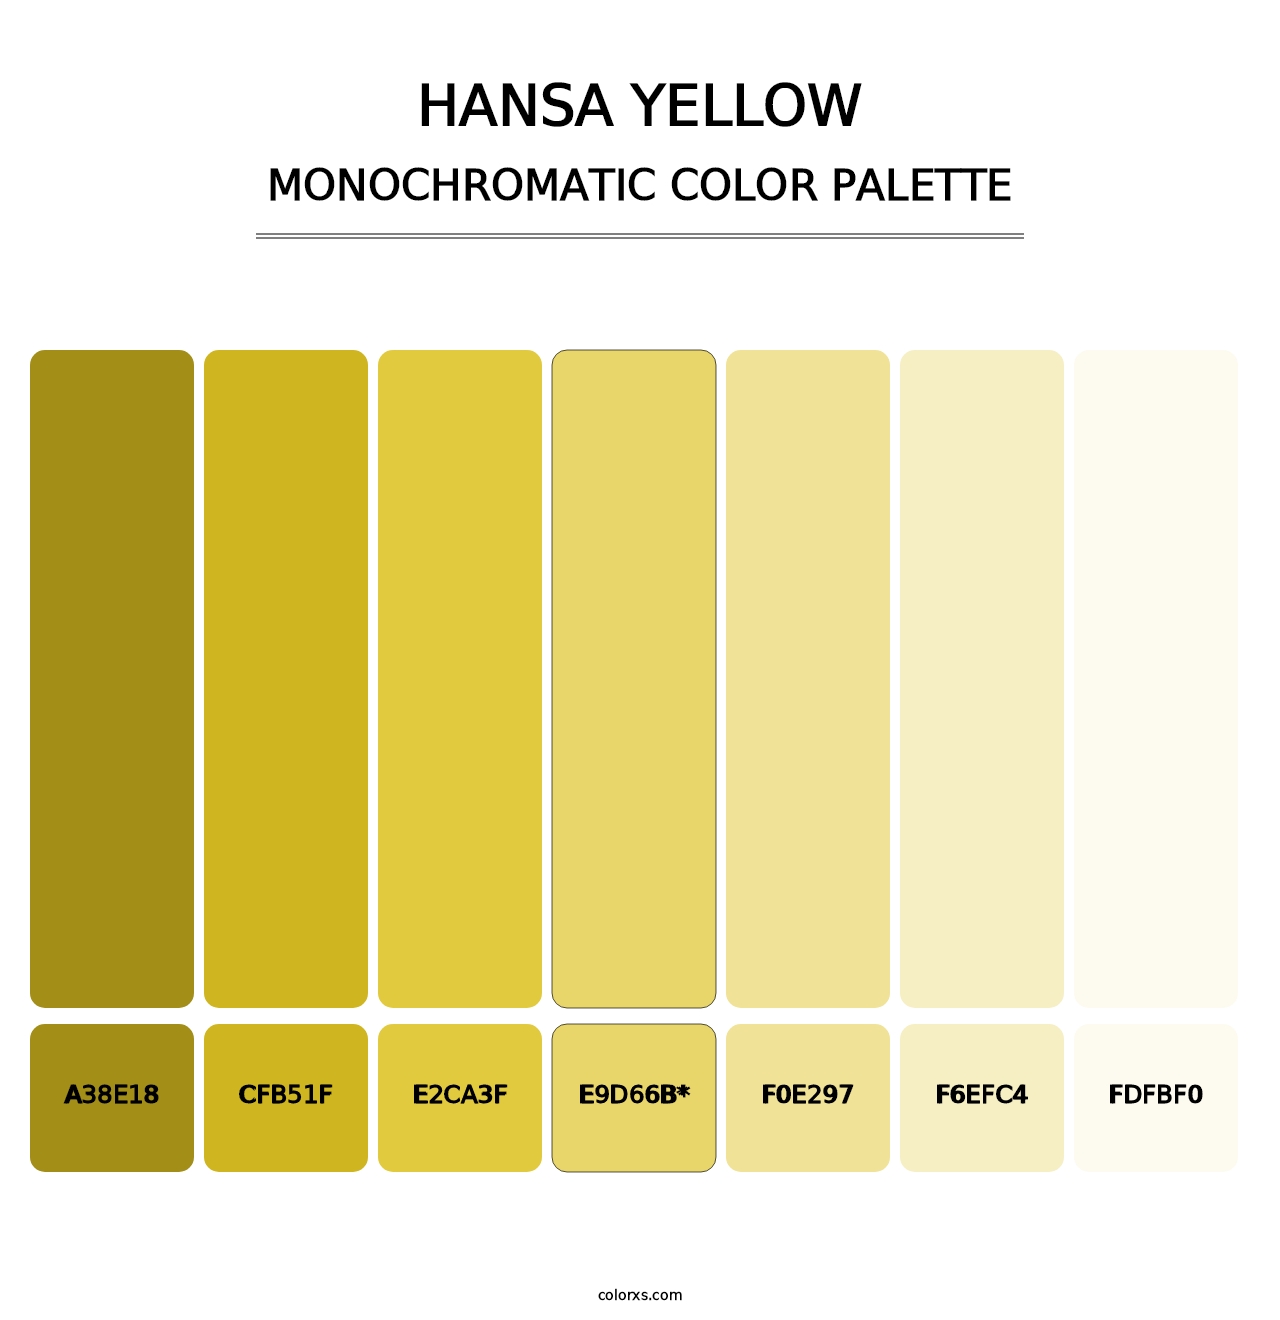 Hansa Yellow - Monochromatic Color Palette